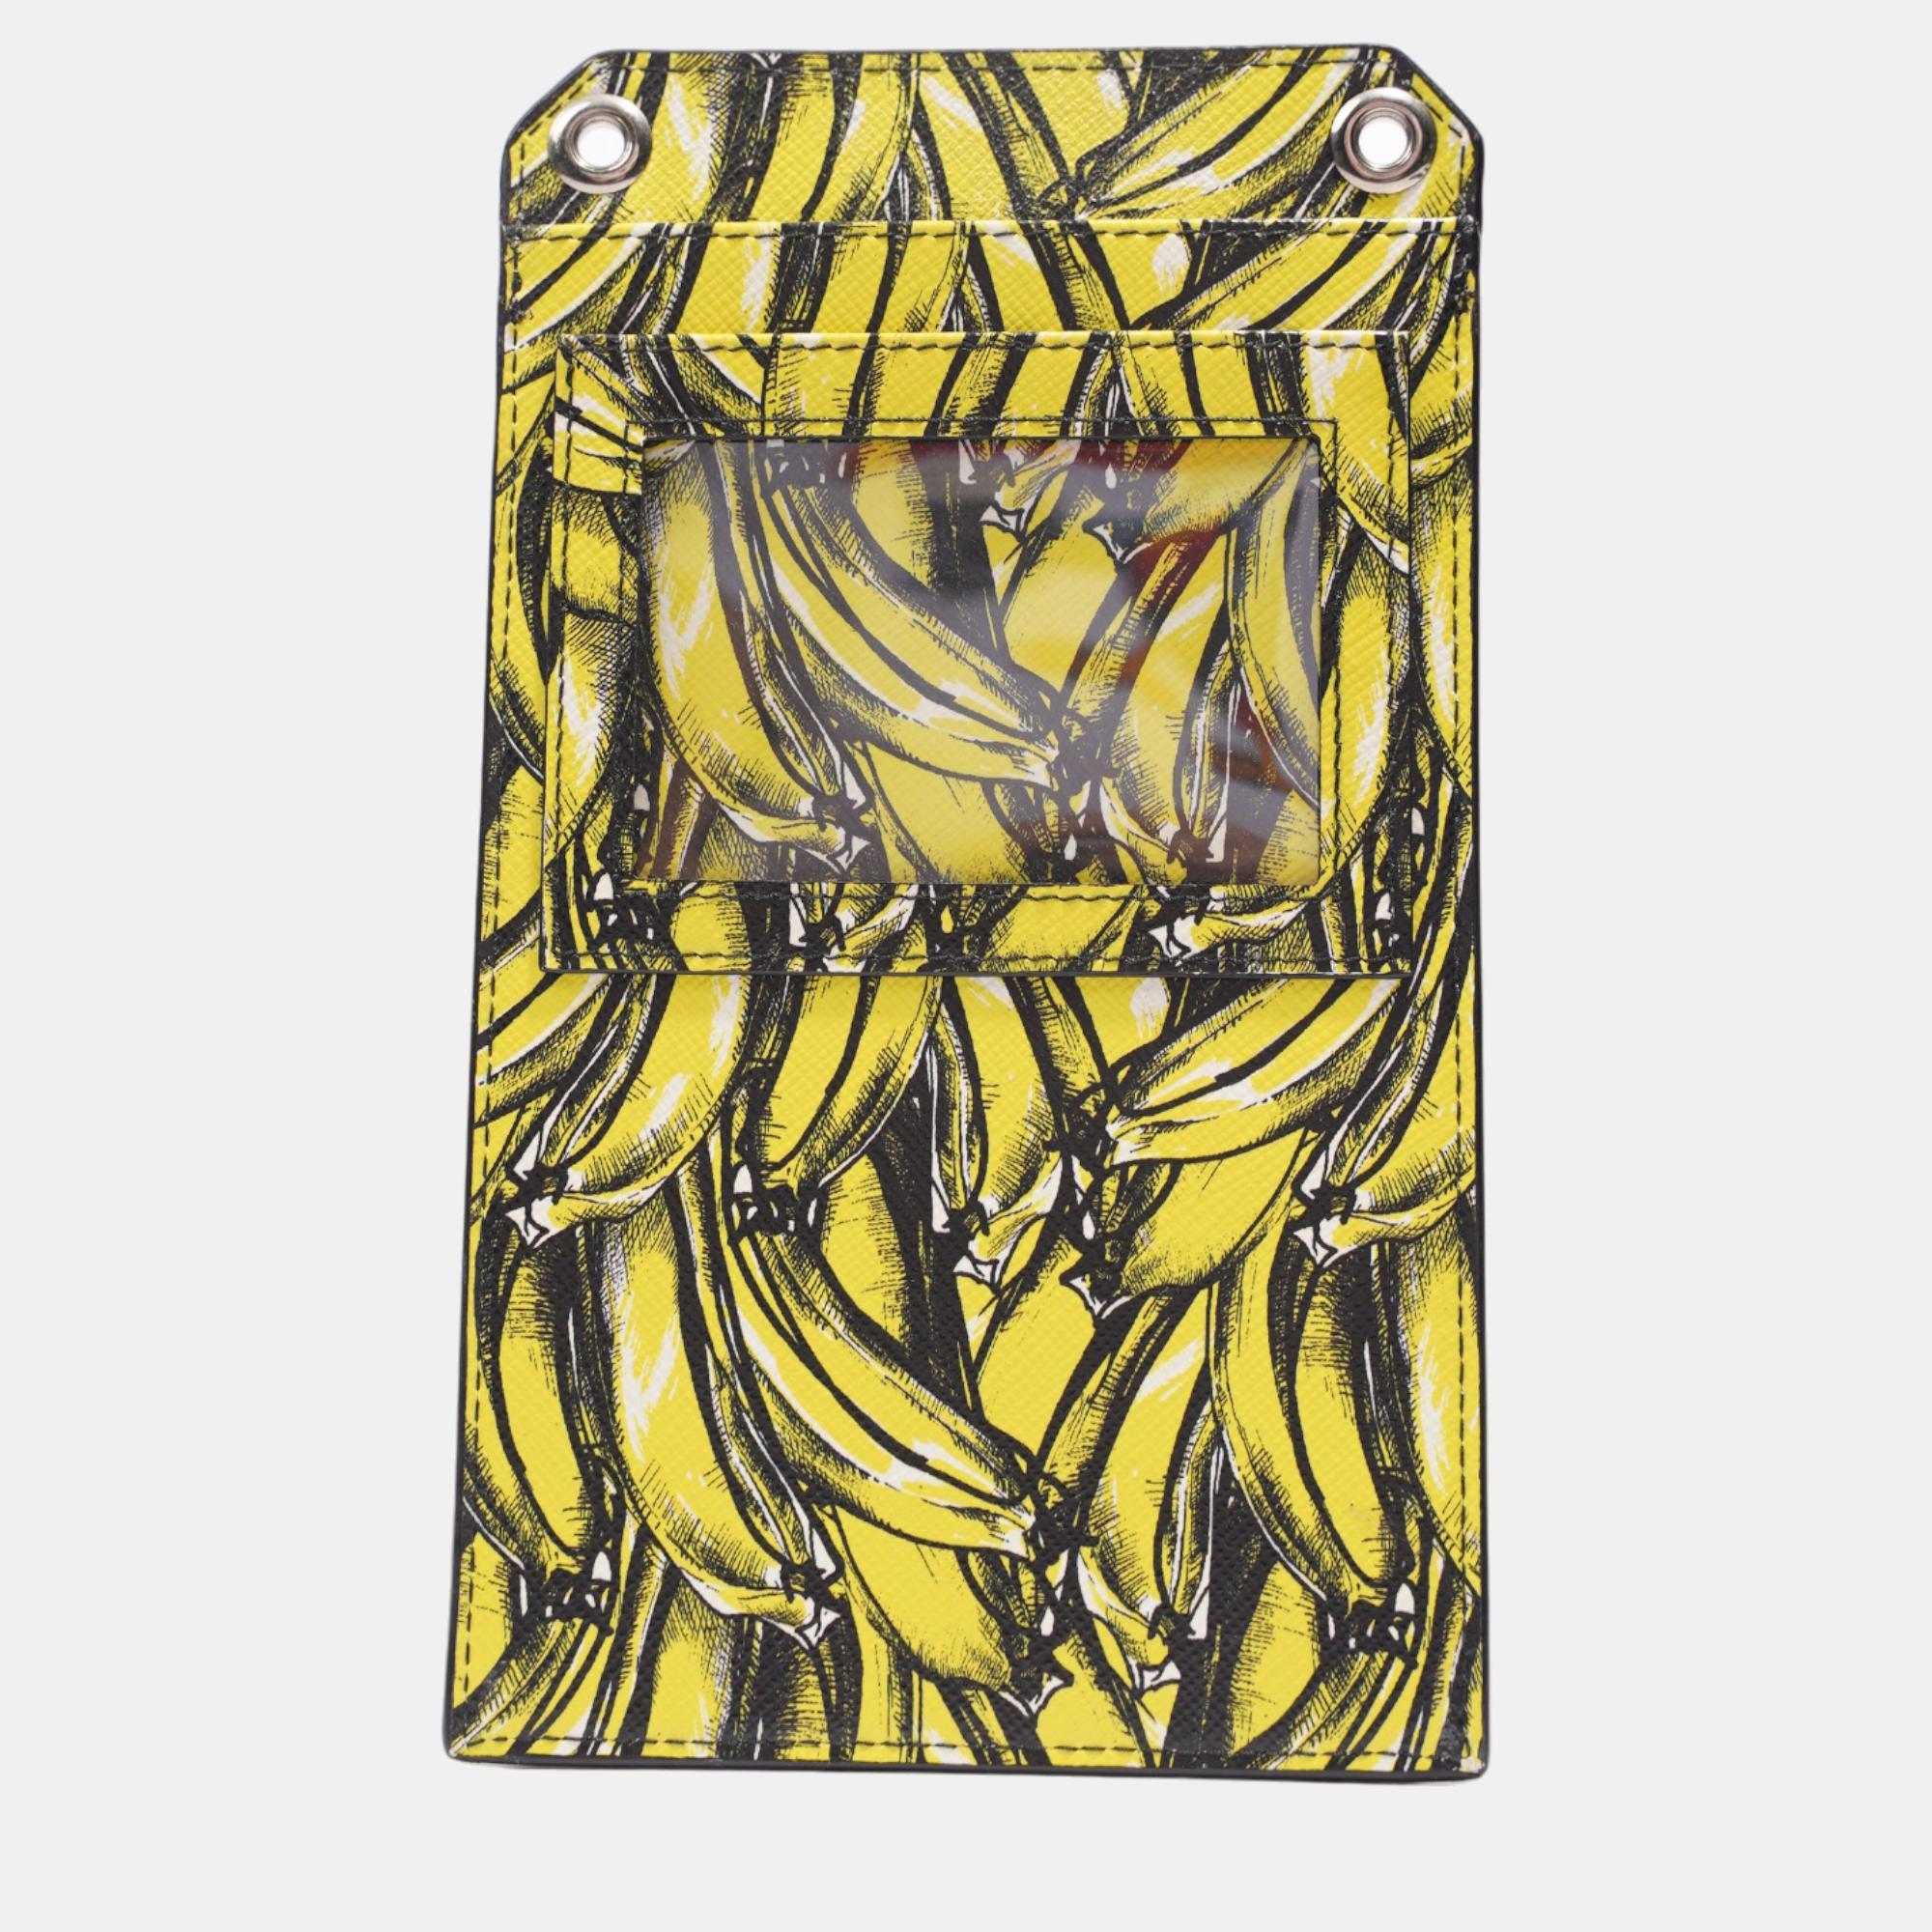 Prada Banana Clutch On Strap Yellow Leather